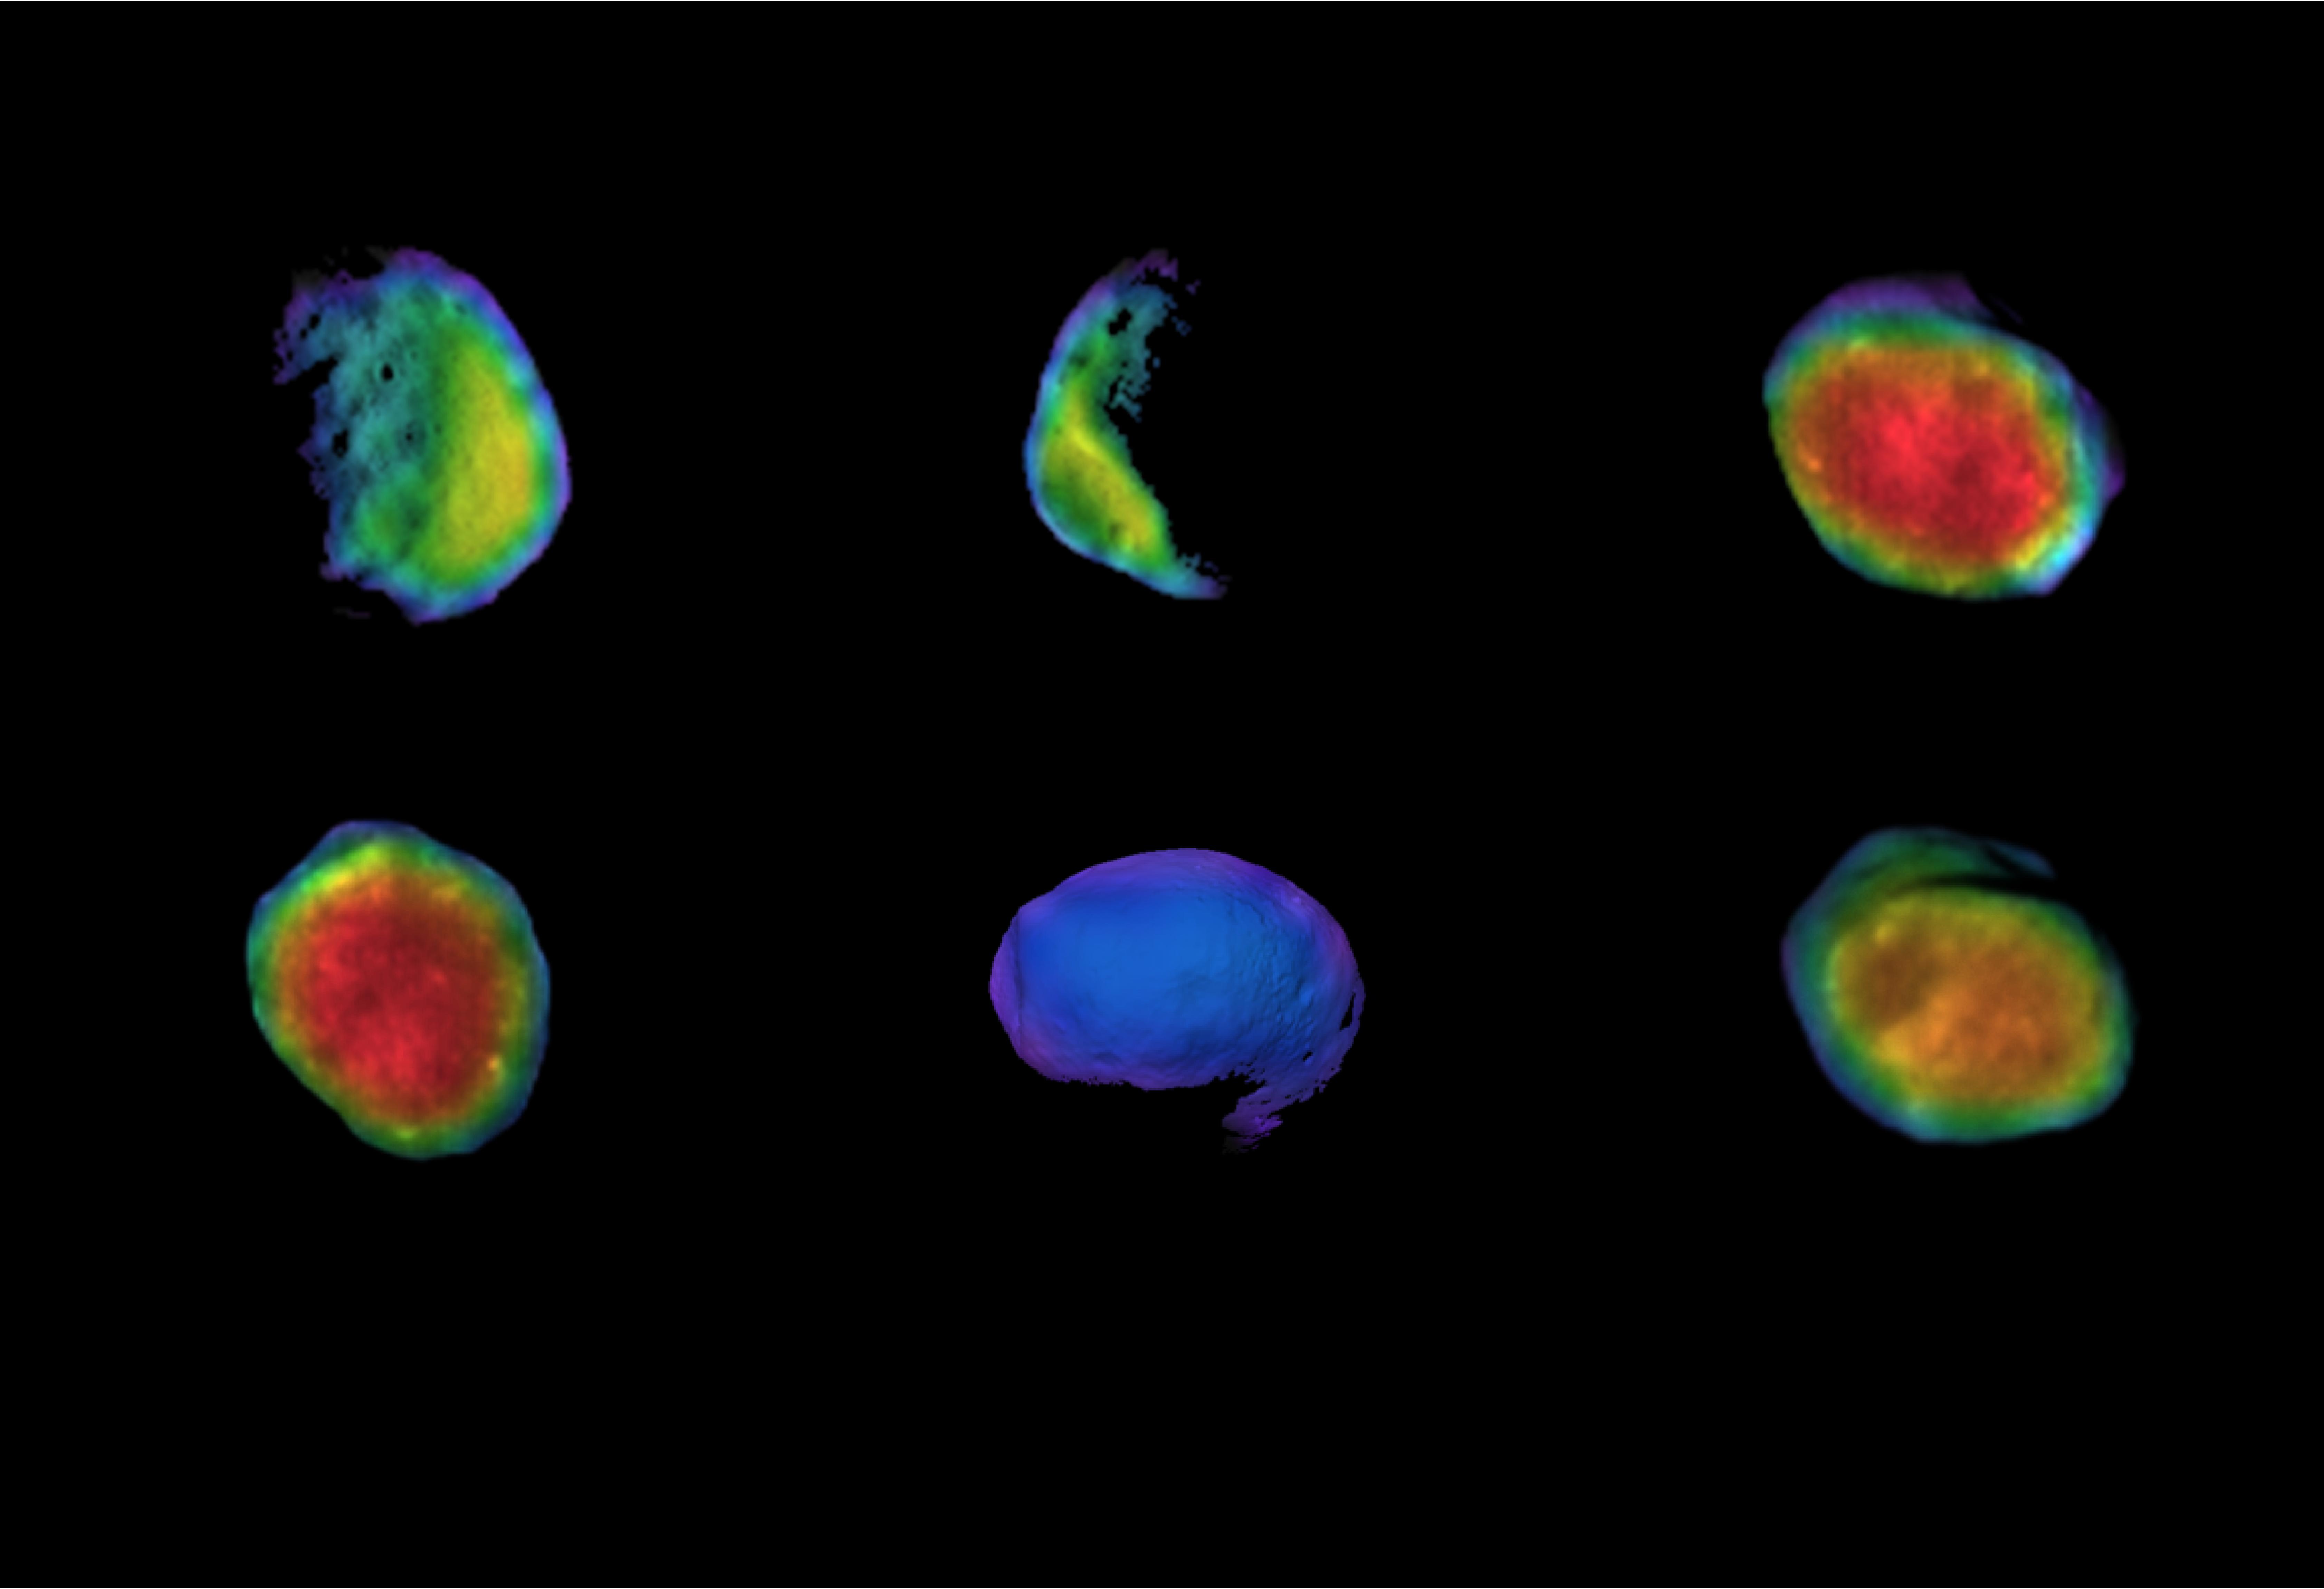 Six views of Martian moon Phobos